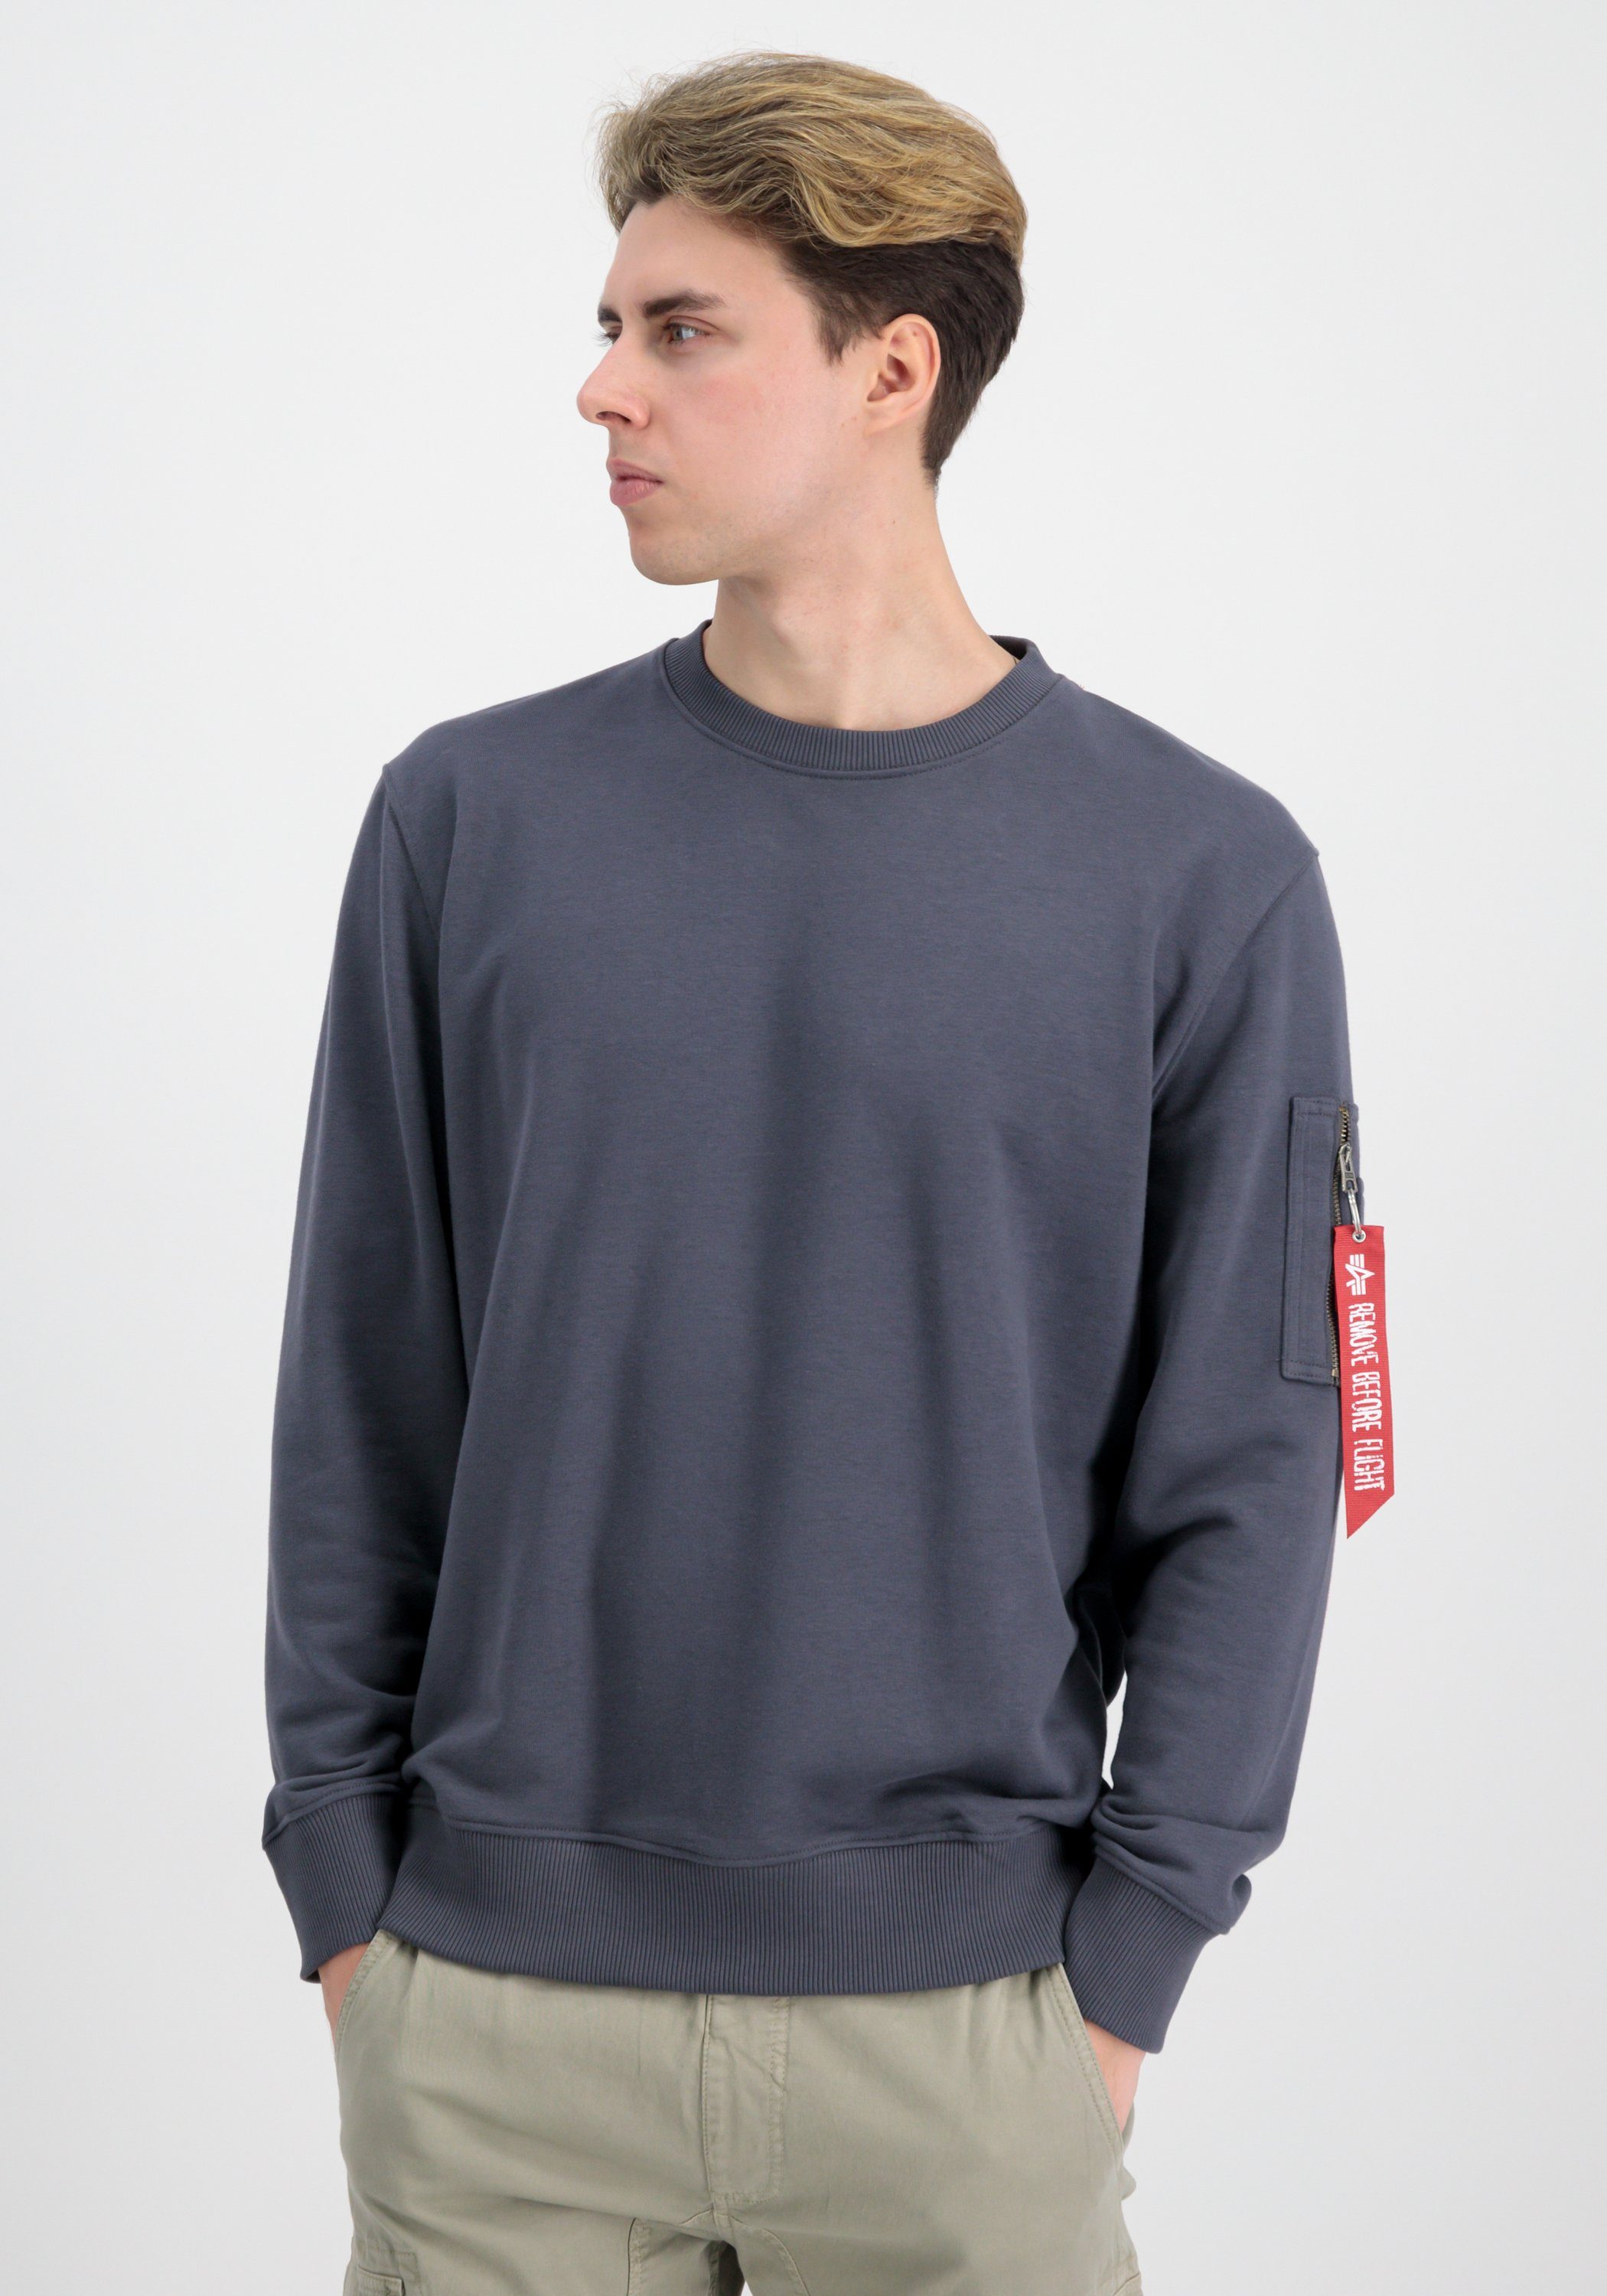 Blood - Alpha greyblack Sweater Men Industries Sweater Industries Chit Alpha USN Sweatshirts